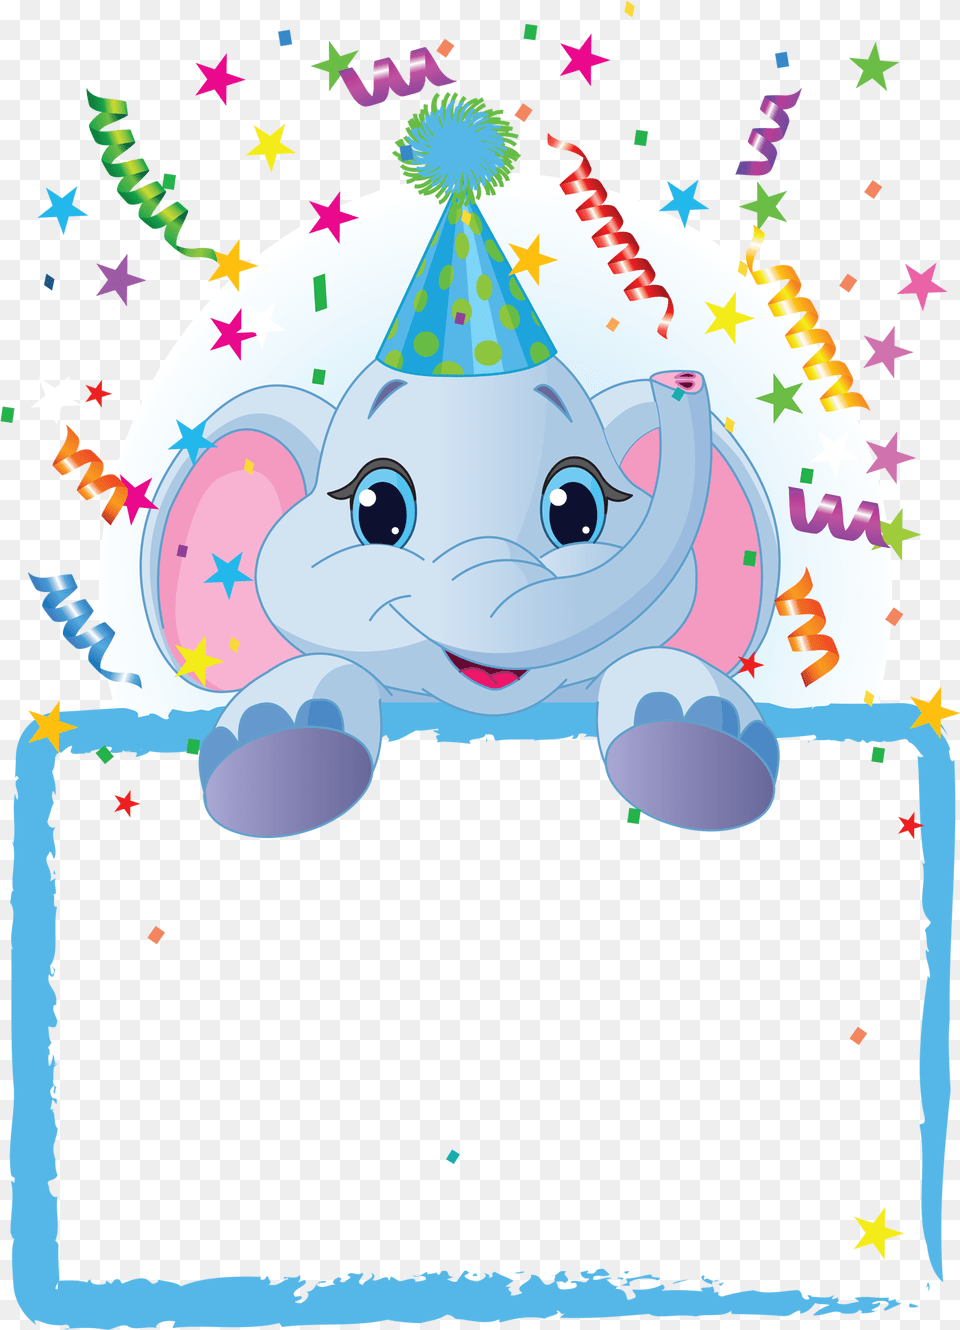 Transparent Kids Blue Frame Gallery Yopriceville Birthday Baby Elephant Cartoon, Clothing, Hat, Birthday Cake, Cake Png Image